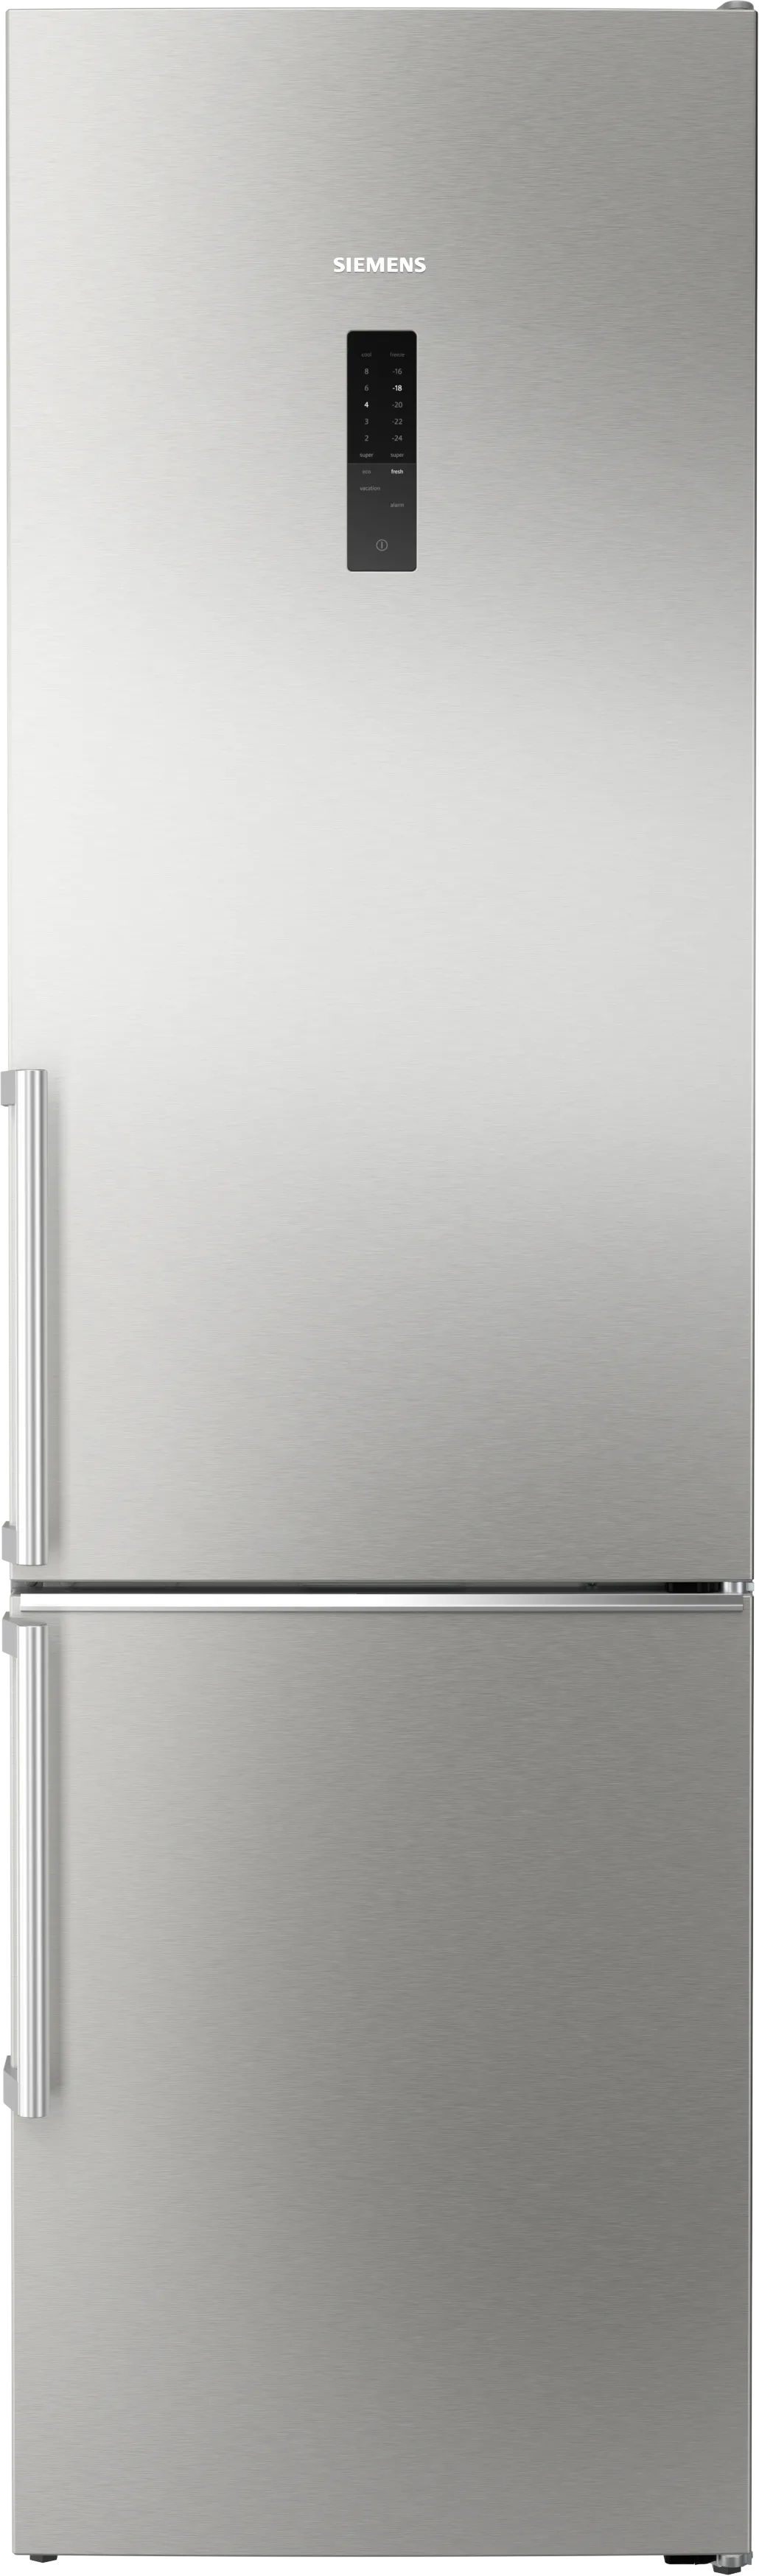 iQ500 Voľne stojaca chladnička s mrazničkou dole 203 x 60 cm antikoro (s povrchom proti odtlačkom prstov) 